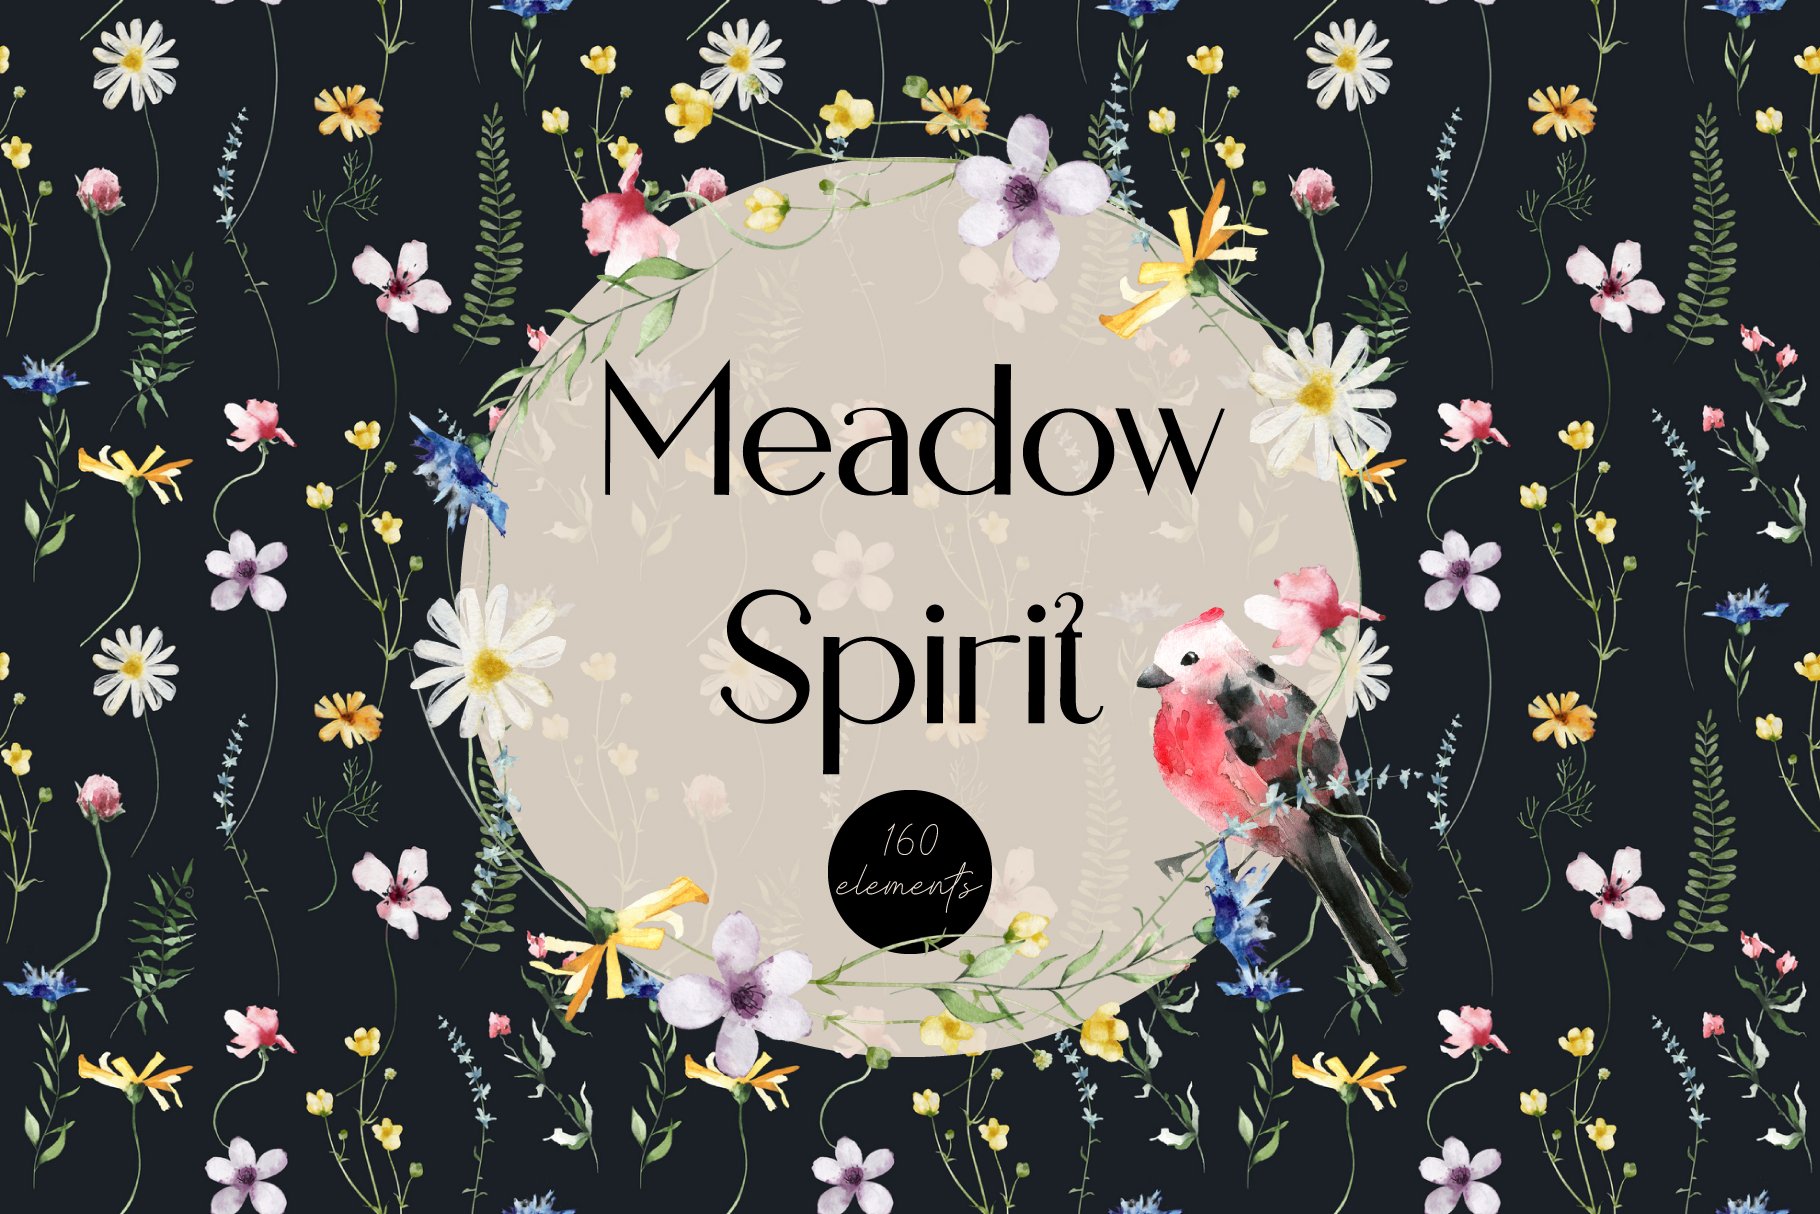 Meadow Spirit wild flowers set cover image.